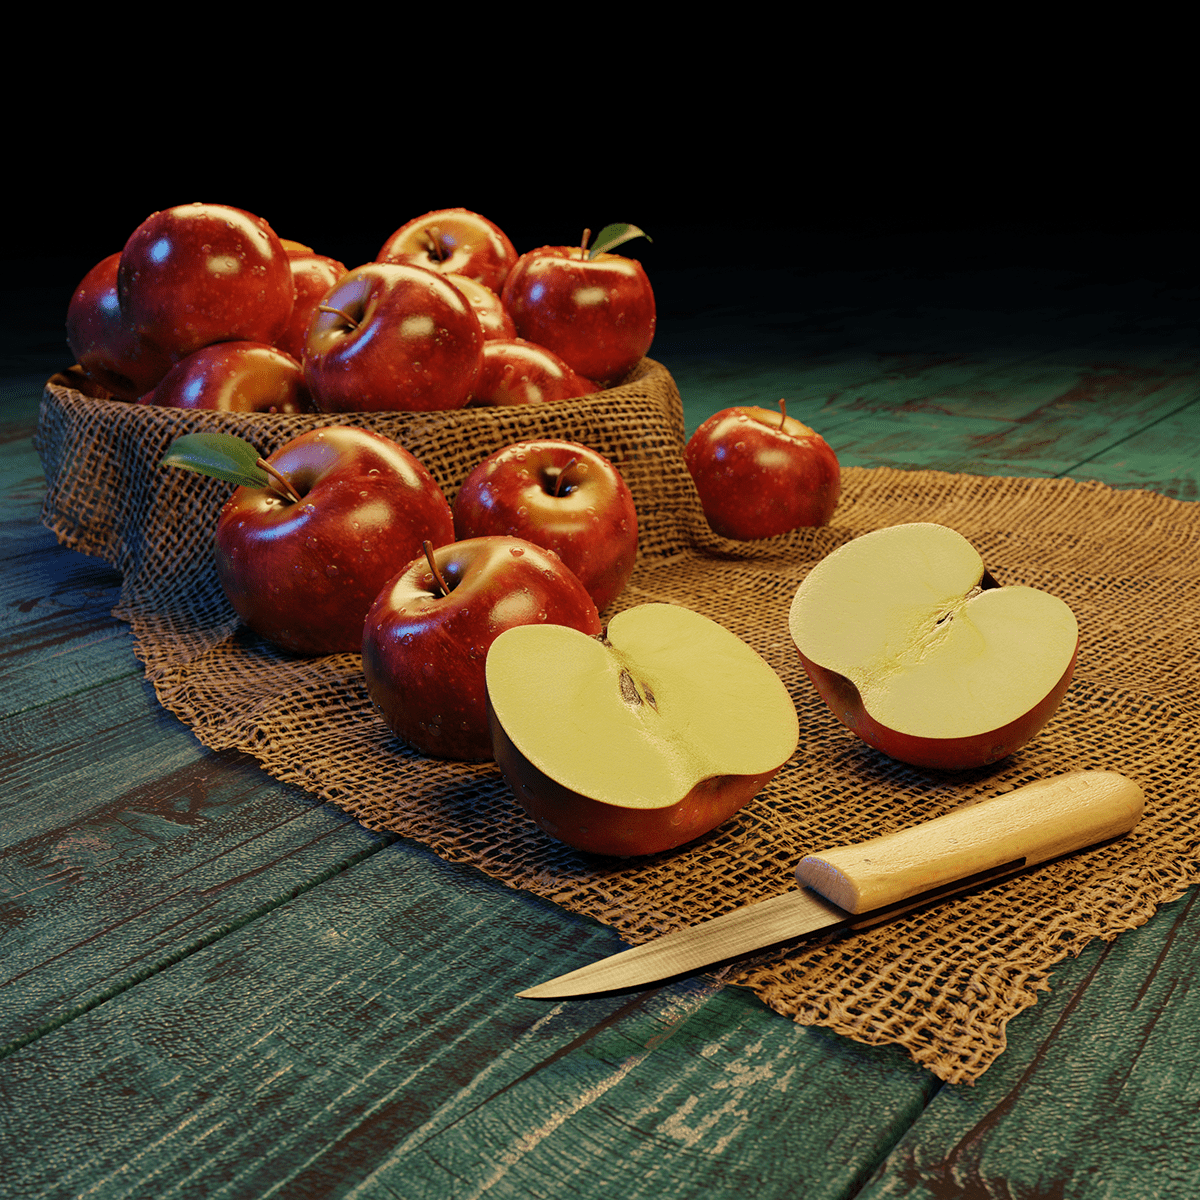 3dart 3DBlender 3dmodel apples blender Fruit mesh photorealism photorealistic